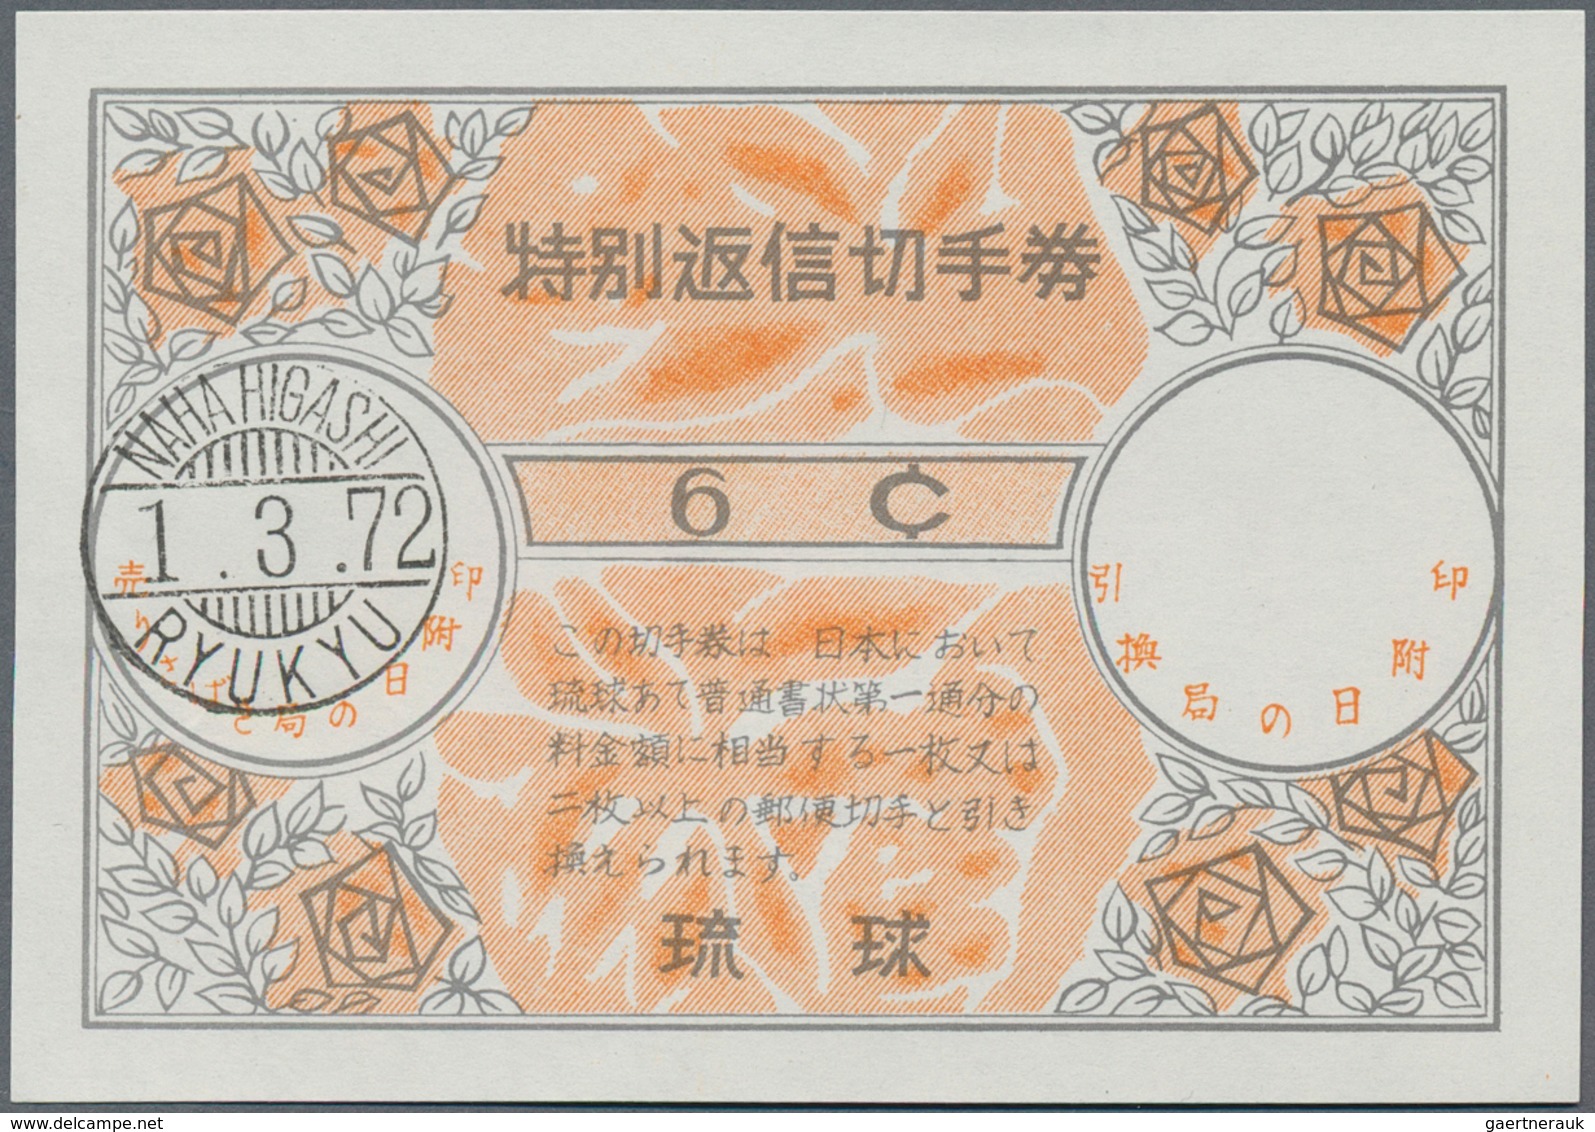 Riukiu - Inseln / Ryu Kyu: 1956/72, IRC International Reply Coupons: "special Reply Coupons" For Ryu - Ryukyu Islands